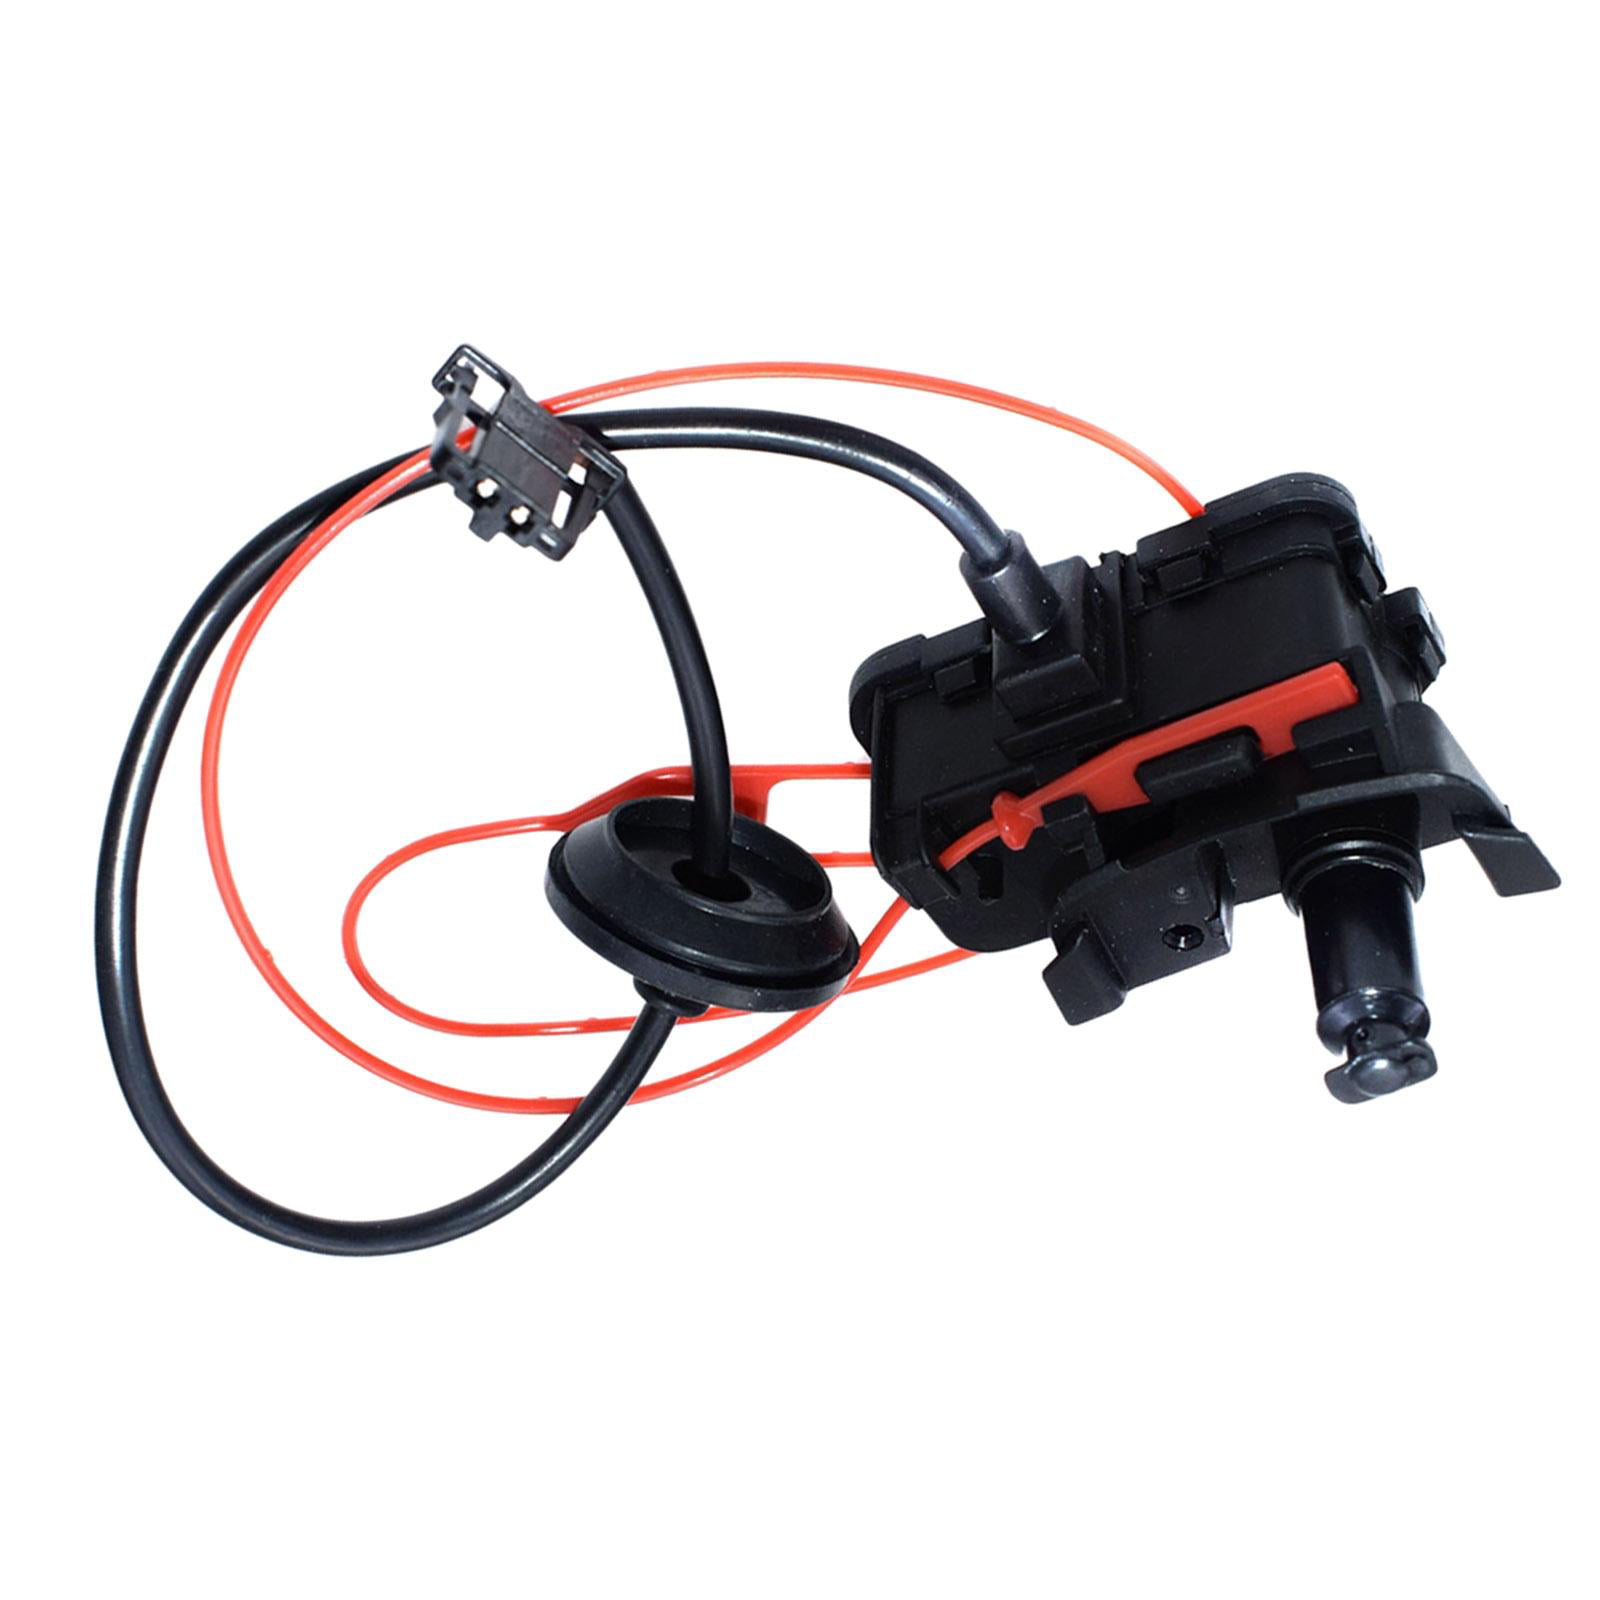 Caploc Brand Wheel Center Cap Cable Lock Kit Universal Design Fits Most Vehicles 